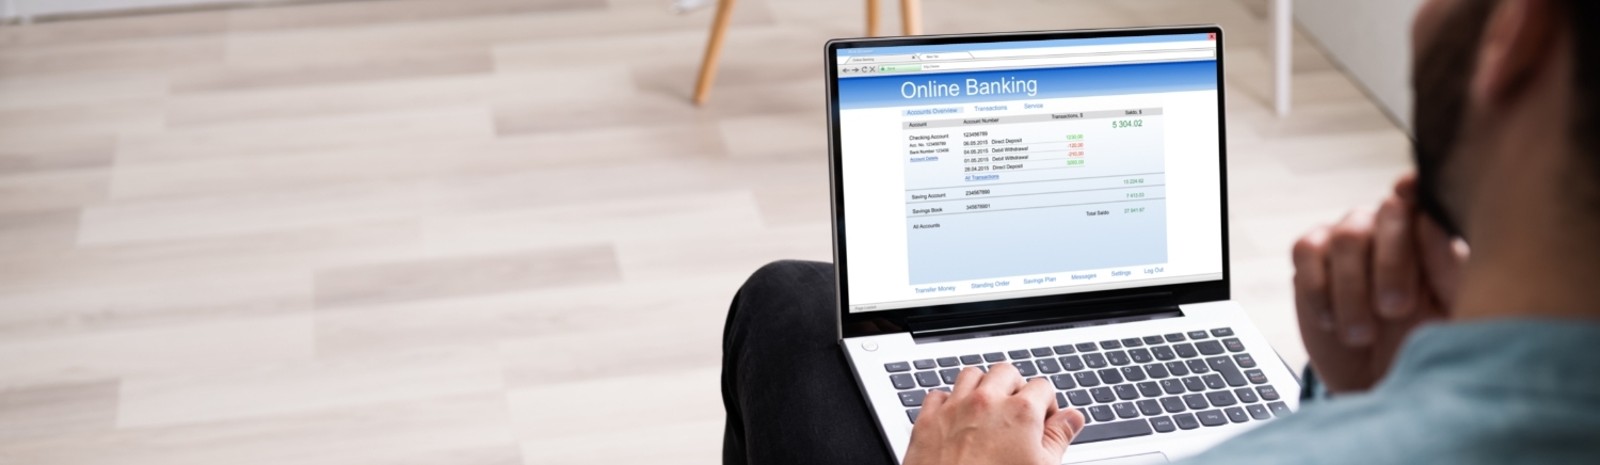 Man looking at online banking statement on laptop